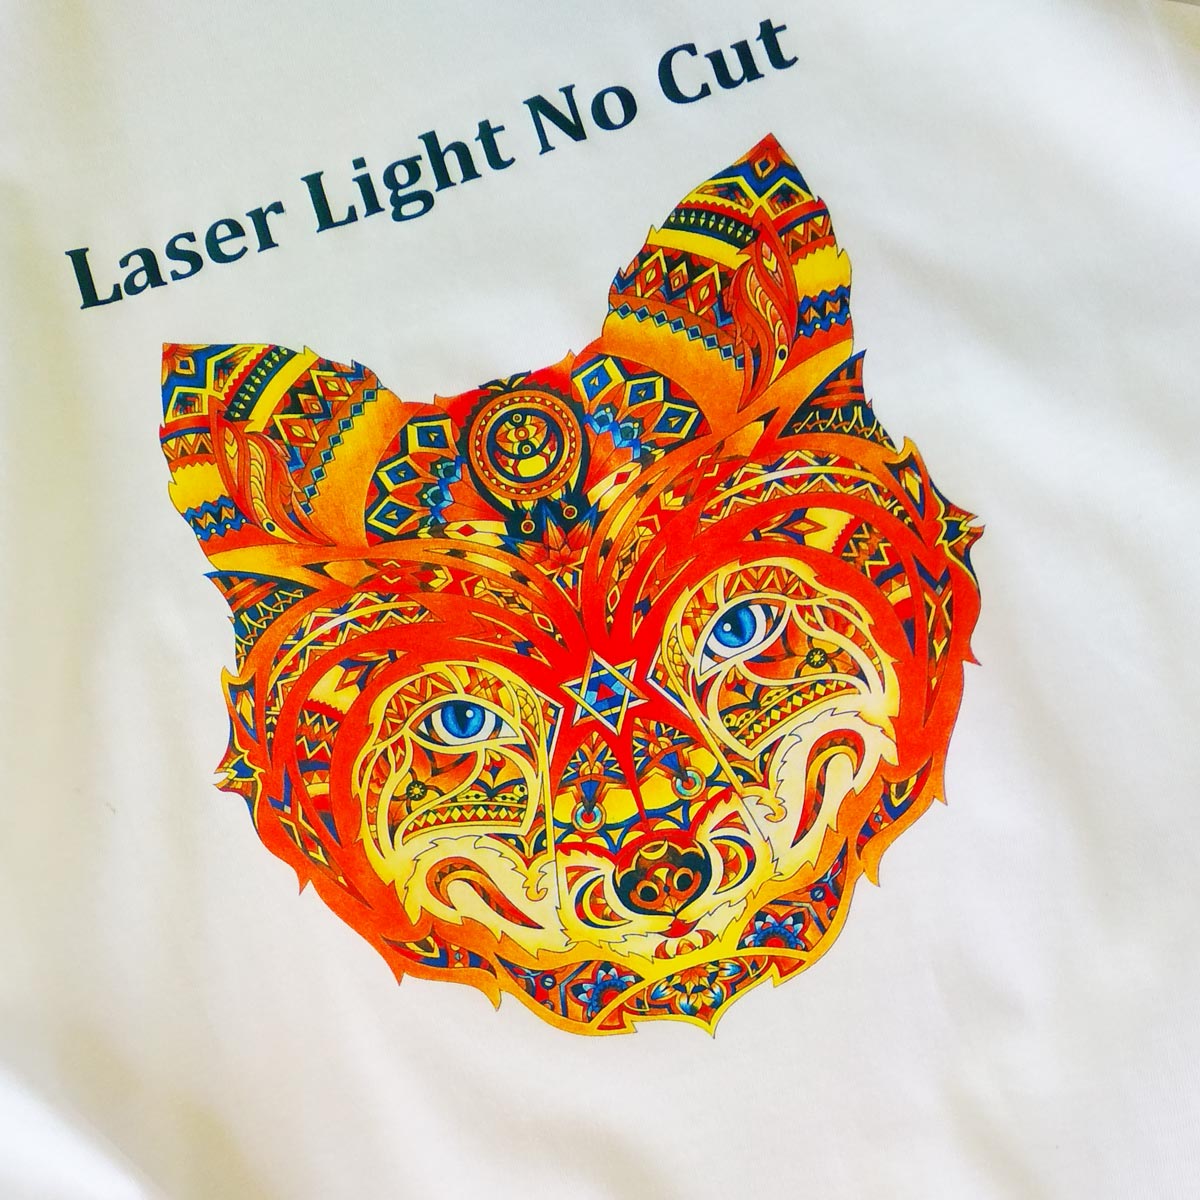 Laser Light No Cut - Transfer paper for light textiles for white toner printers - 10 sheets